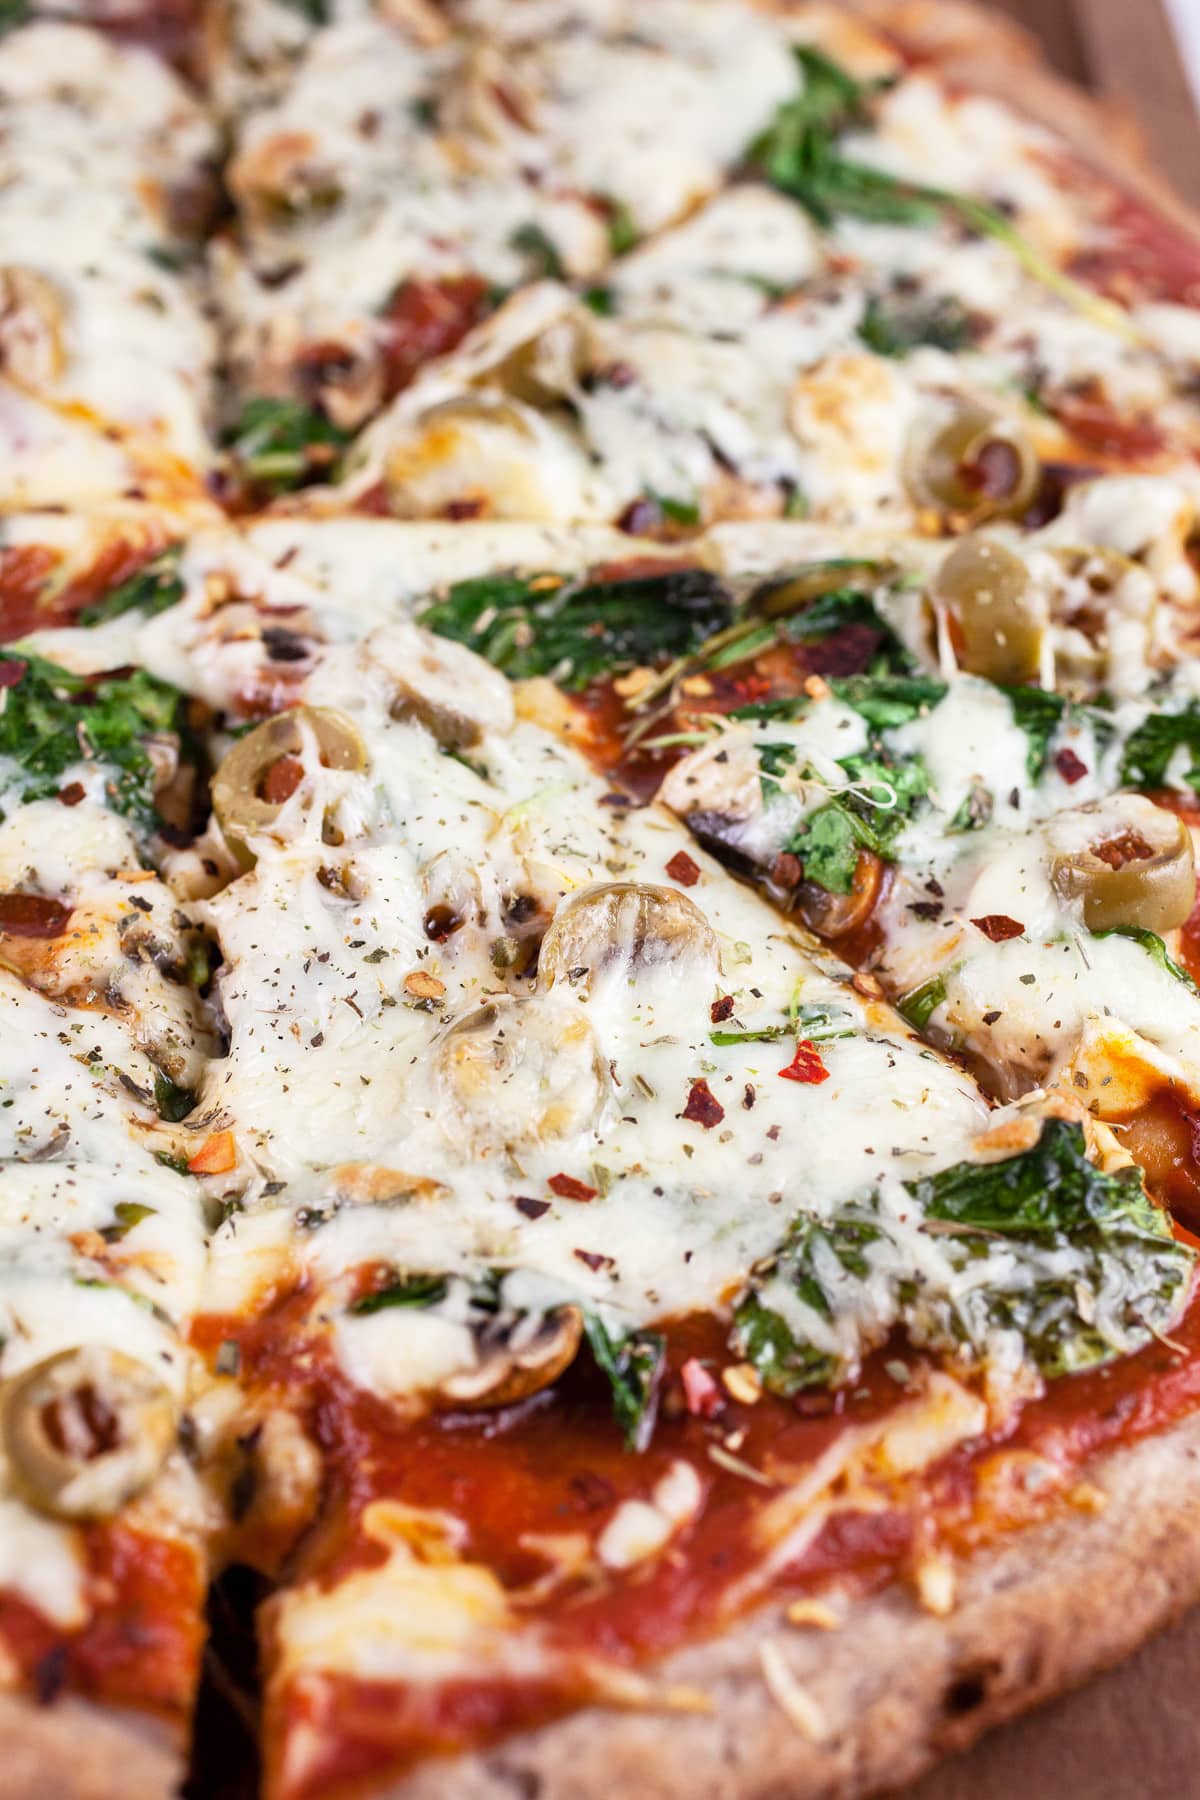 Mushroom arugula pizza with olives and mozzarella cheese cut into slices.